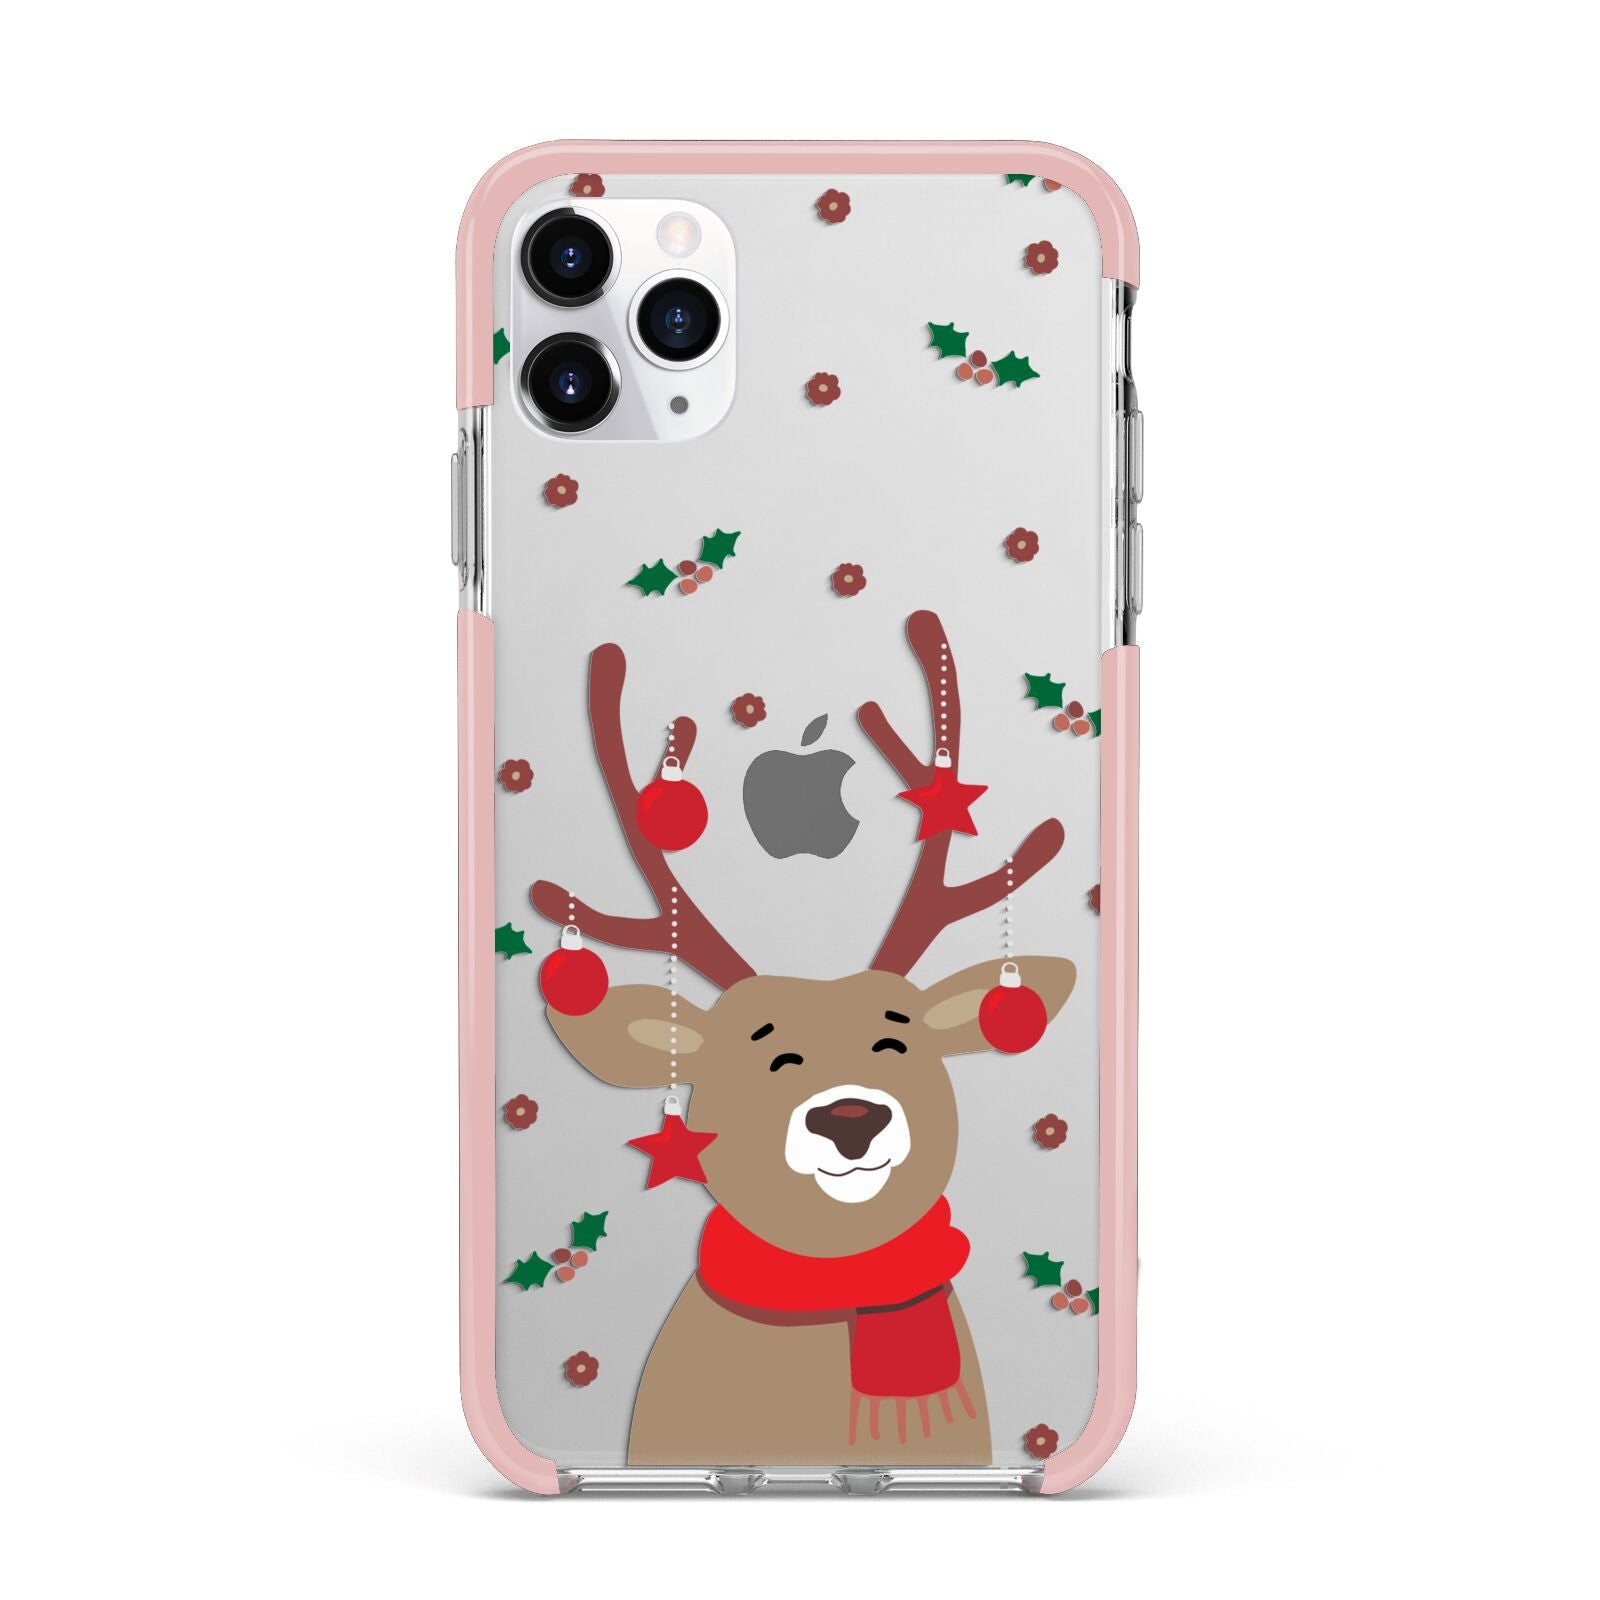 Reindeer Christmas iPhone 11 Pro Max Impact Pink Edge Case